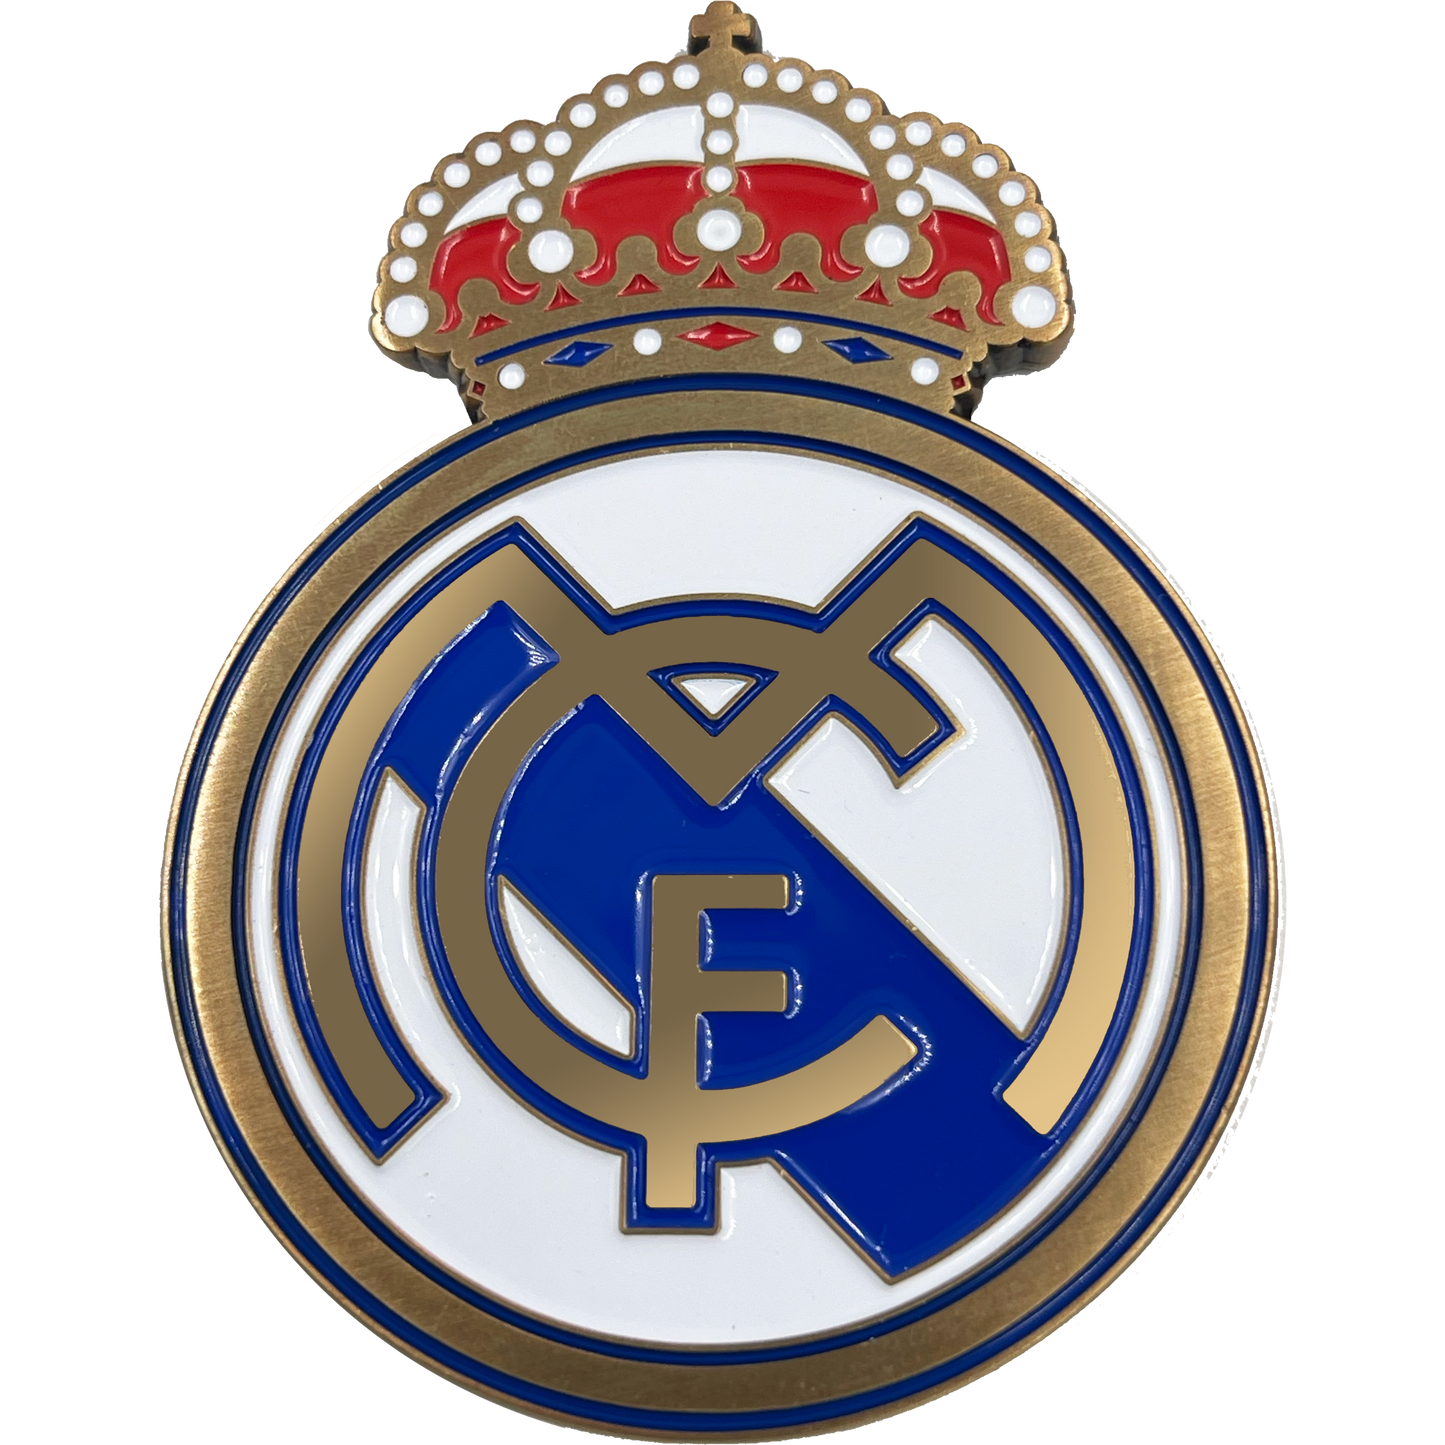 BL13-010 Real Madrid CF Futbol Soccer Policia Municipal Challenge Coin